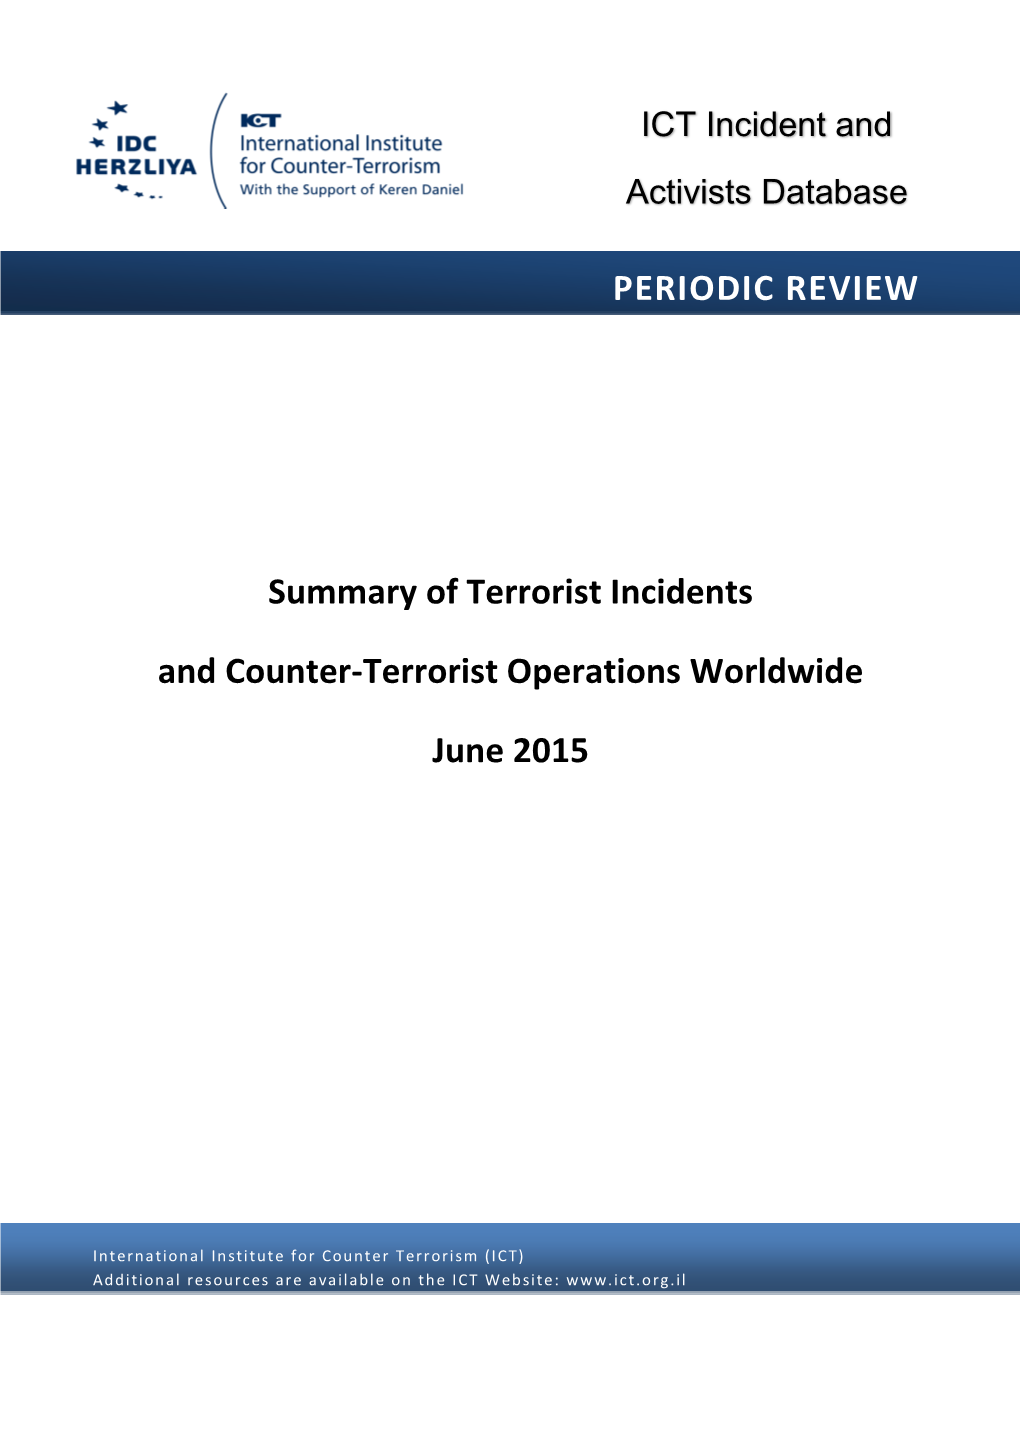 Summary of Terrorist Incidents and Counter-Terrorist Operations